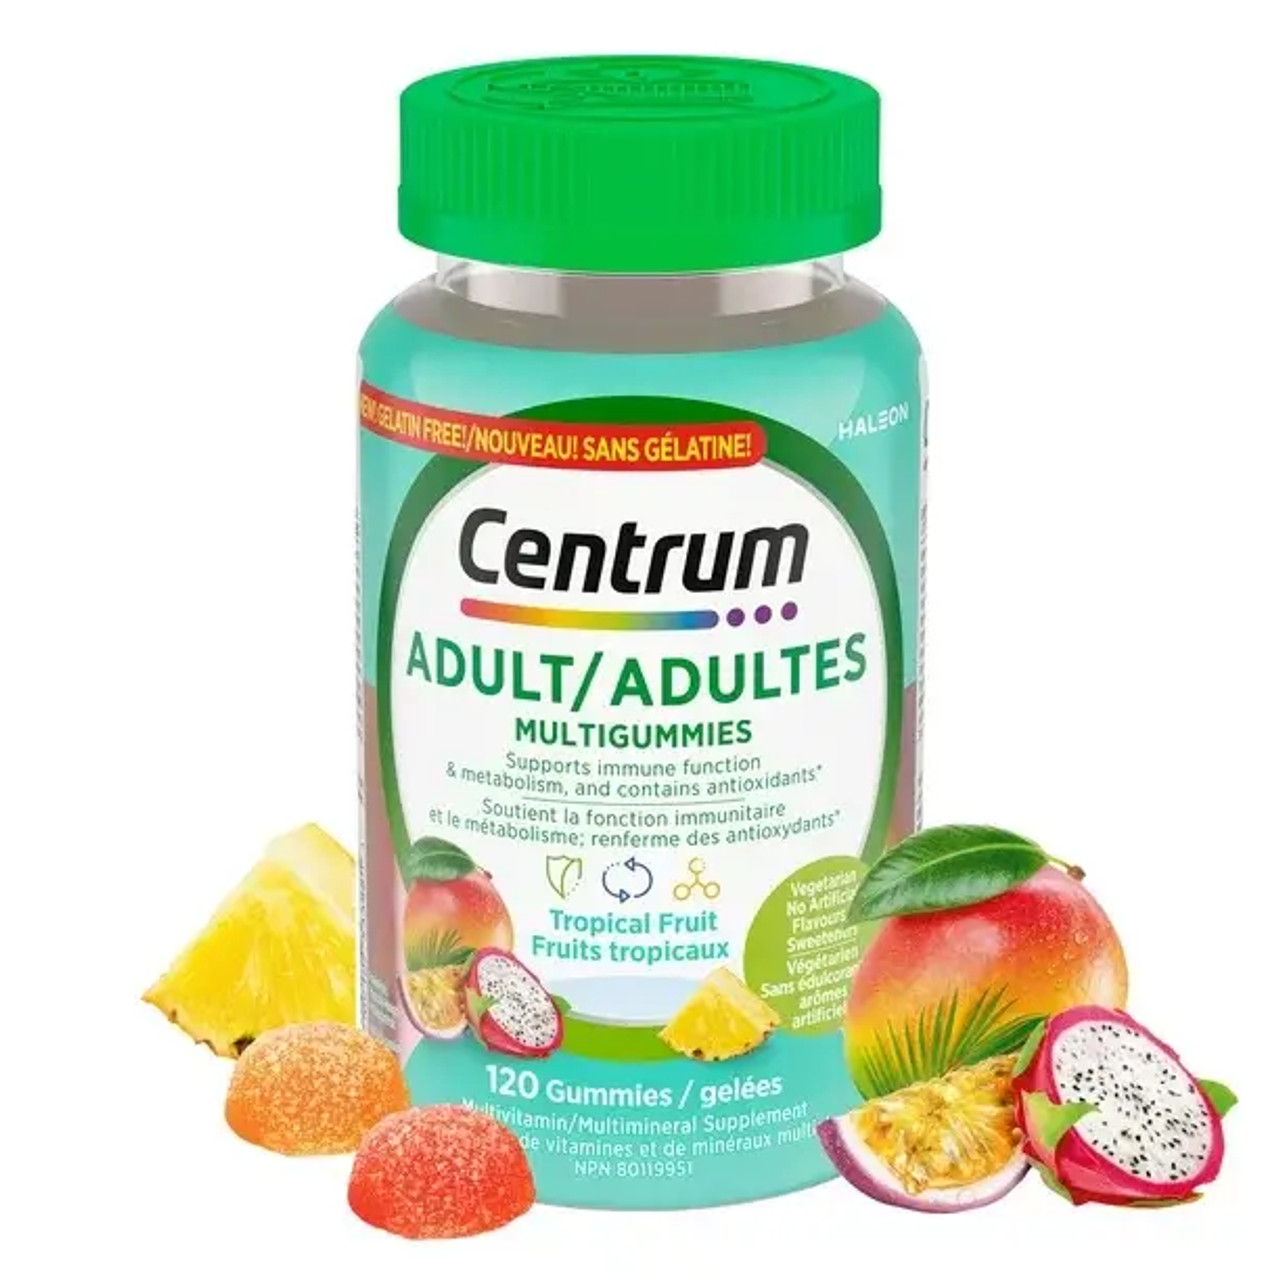 Centrum Adult MultiGummies Tropical Fruit Multivitamin and Multimineral Supplement